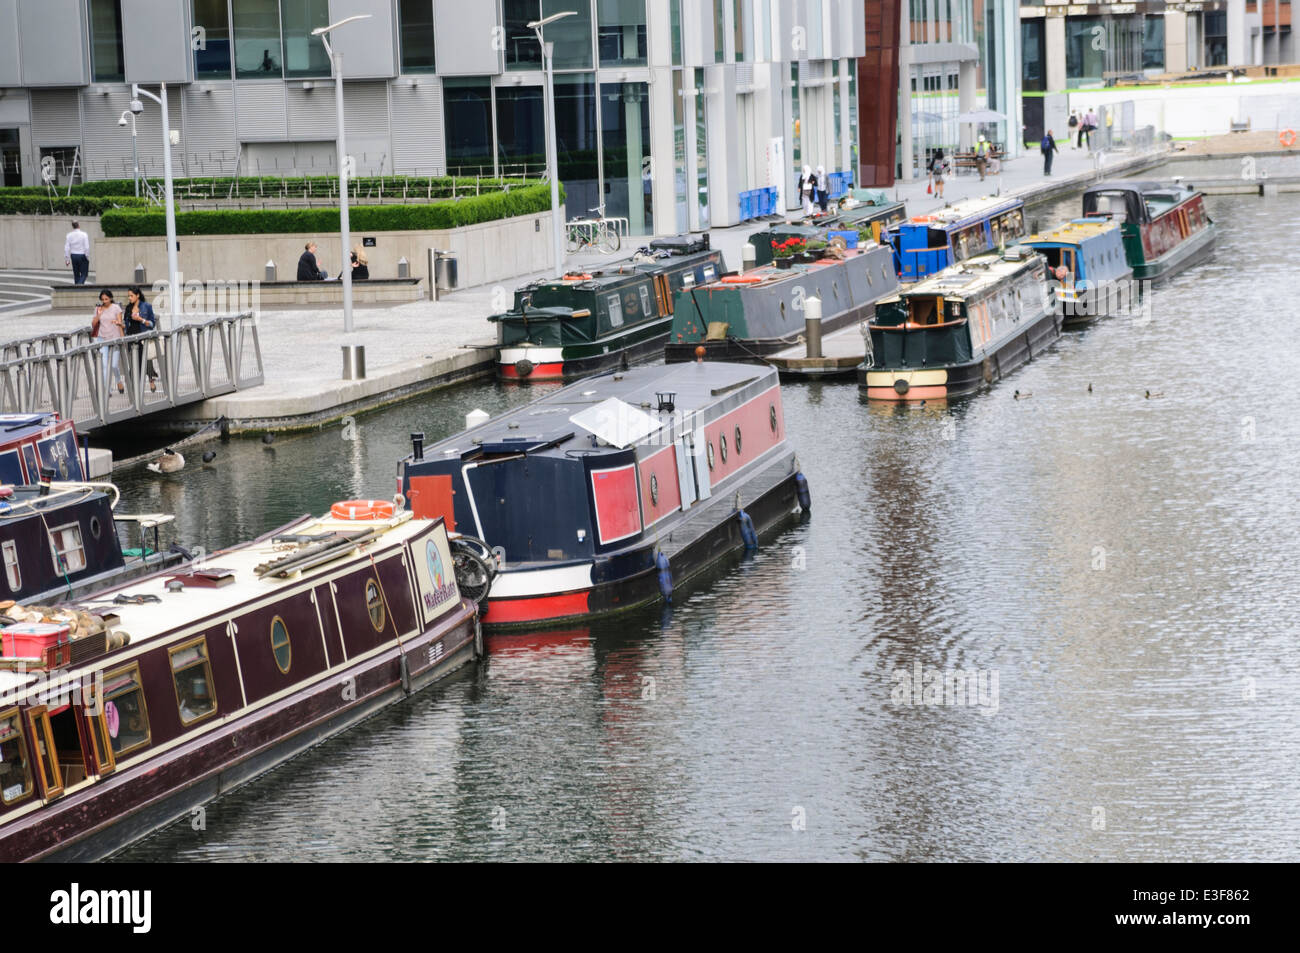 Canal boats moored at Paddington Basin, alongside tall office buildings. Stock Photo